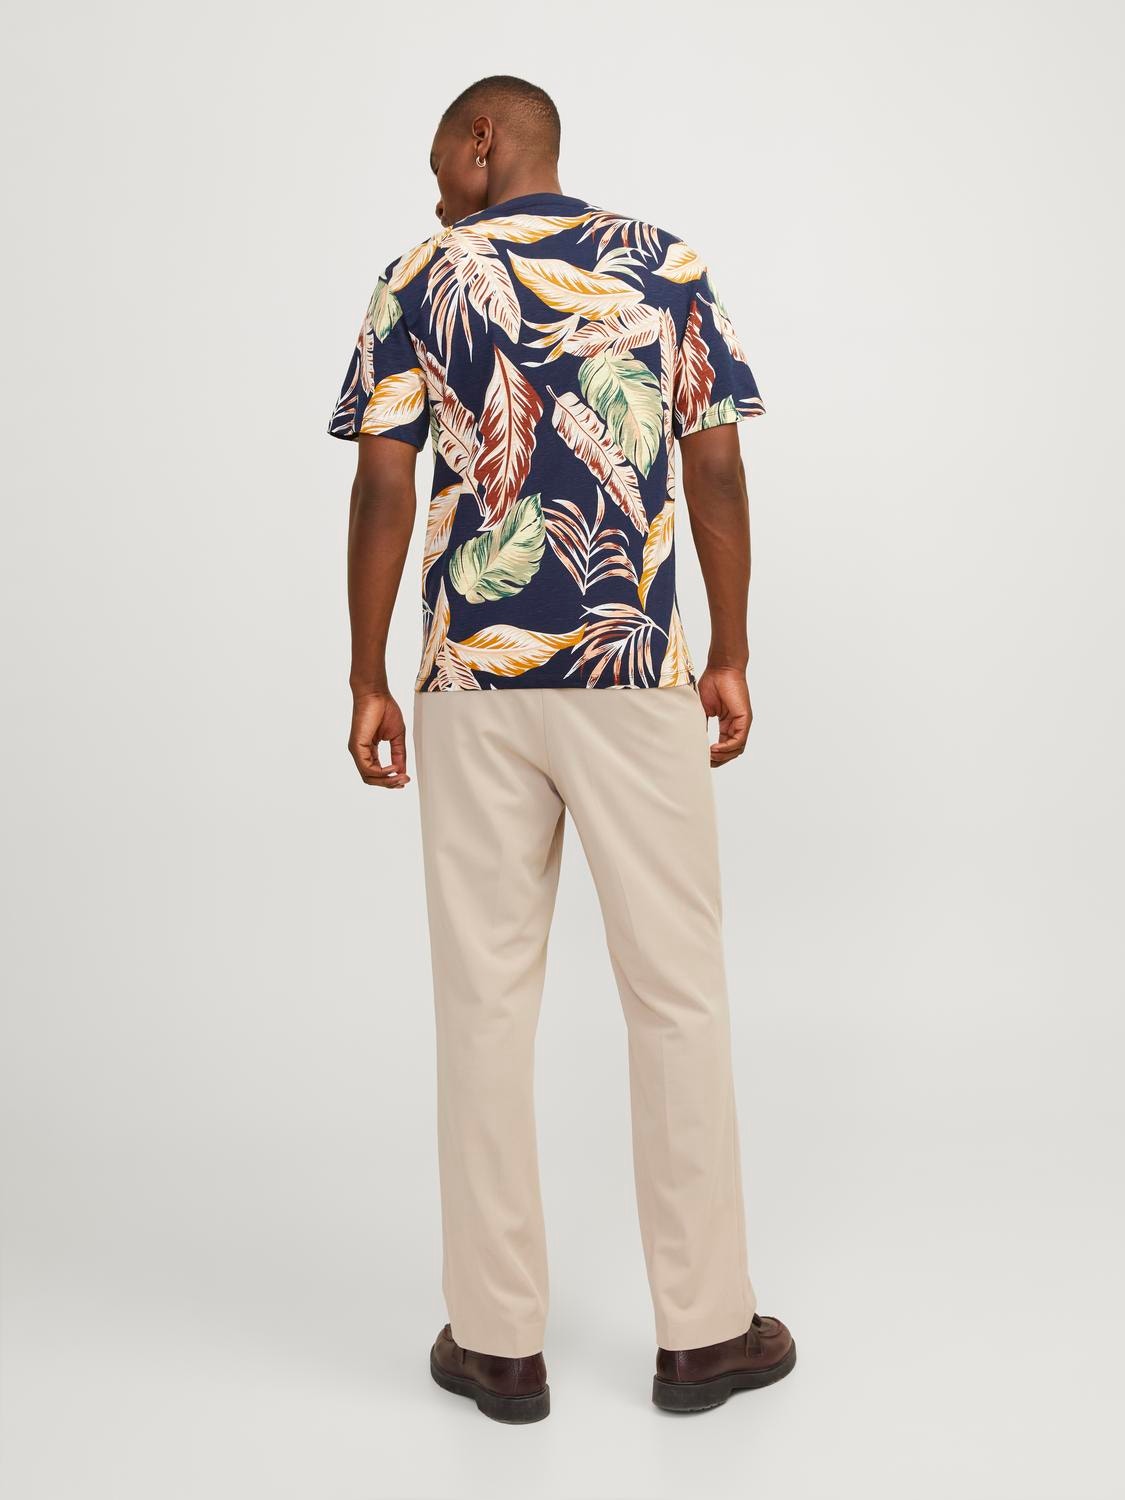 Jack & Jones T-shirt Estampado total Decote Redondo -Navy Blazer - 12249329